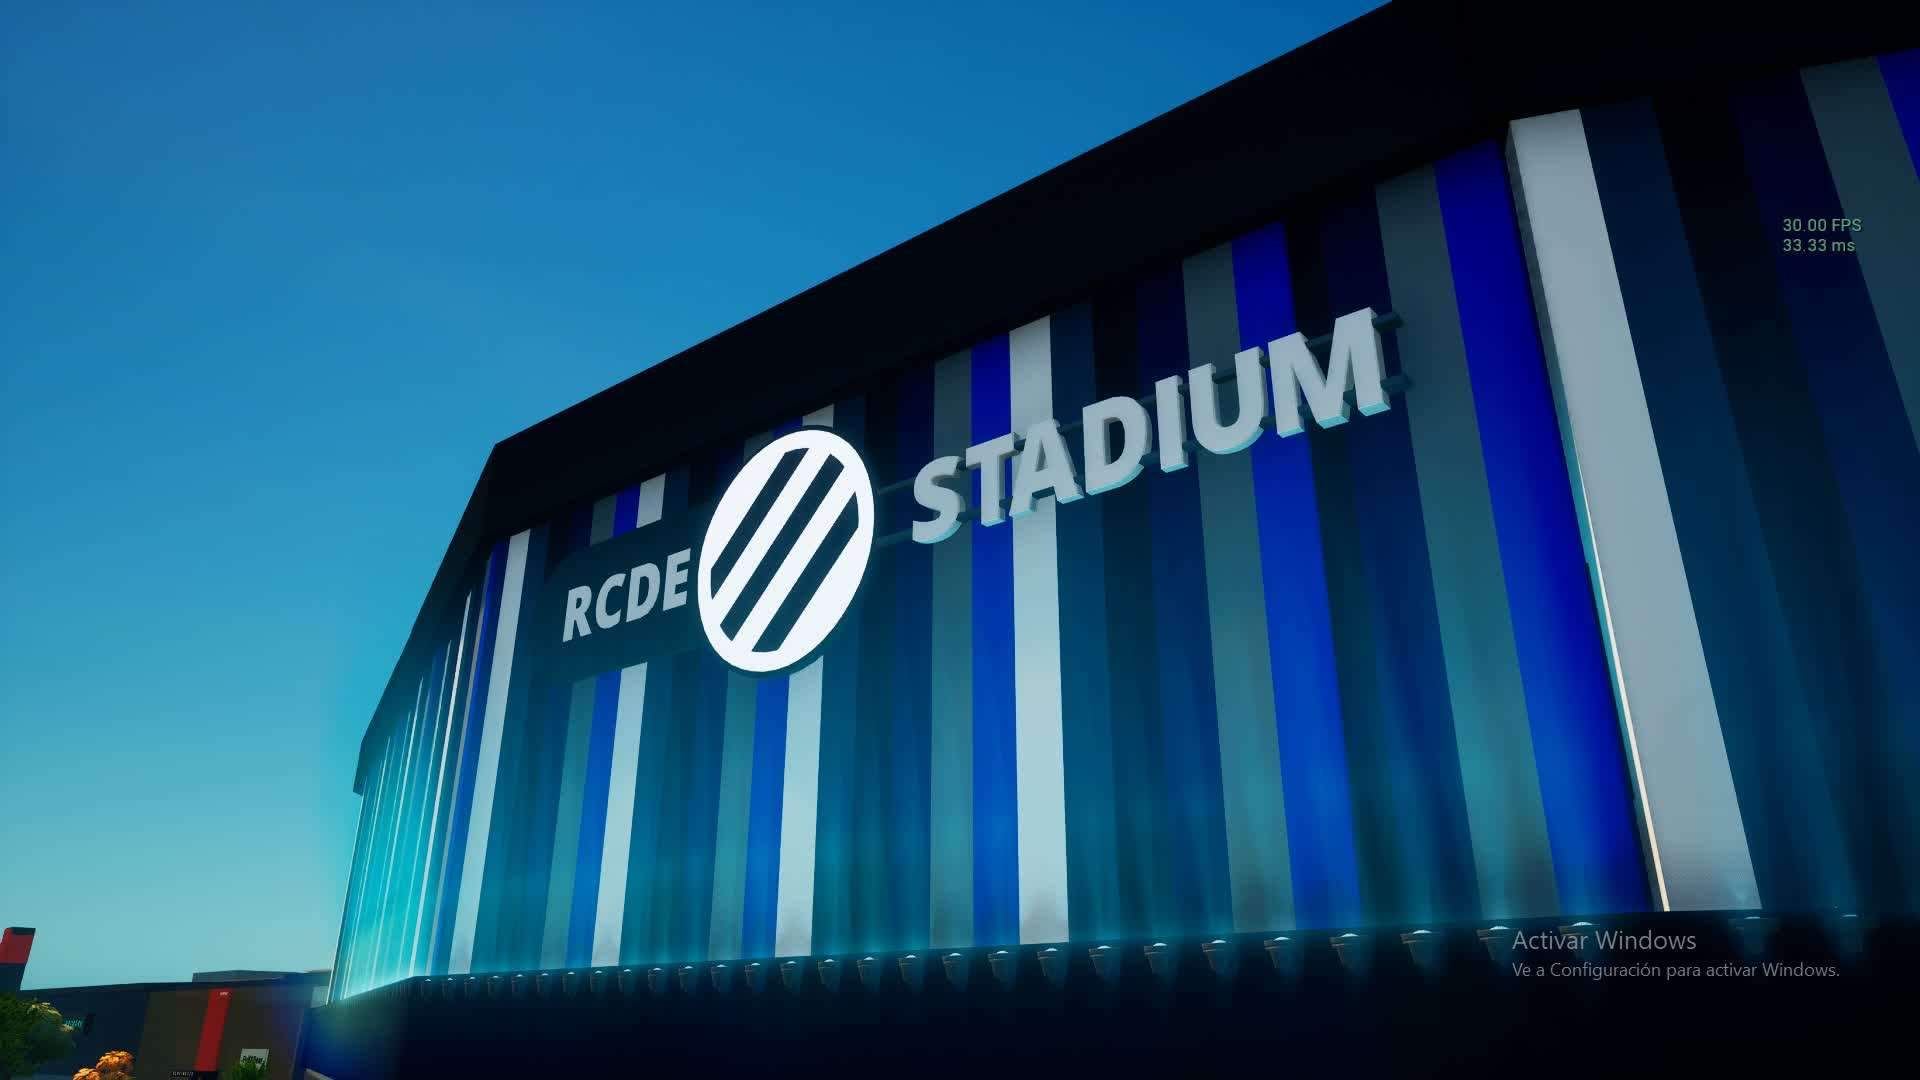 RCDE Stadium (By POWAKTM)